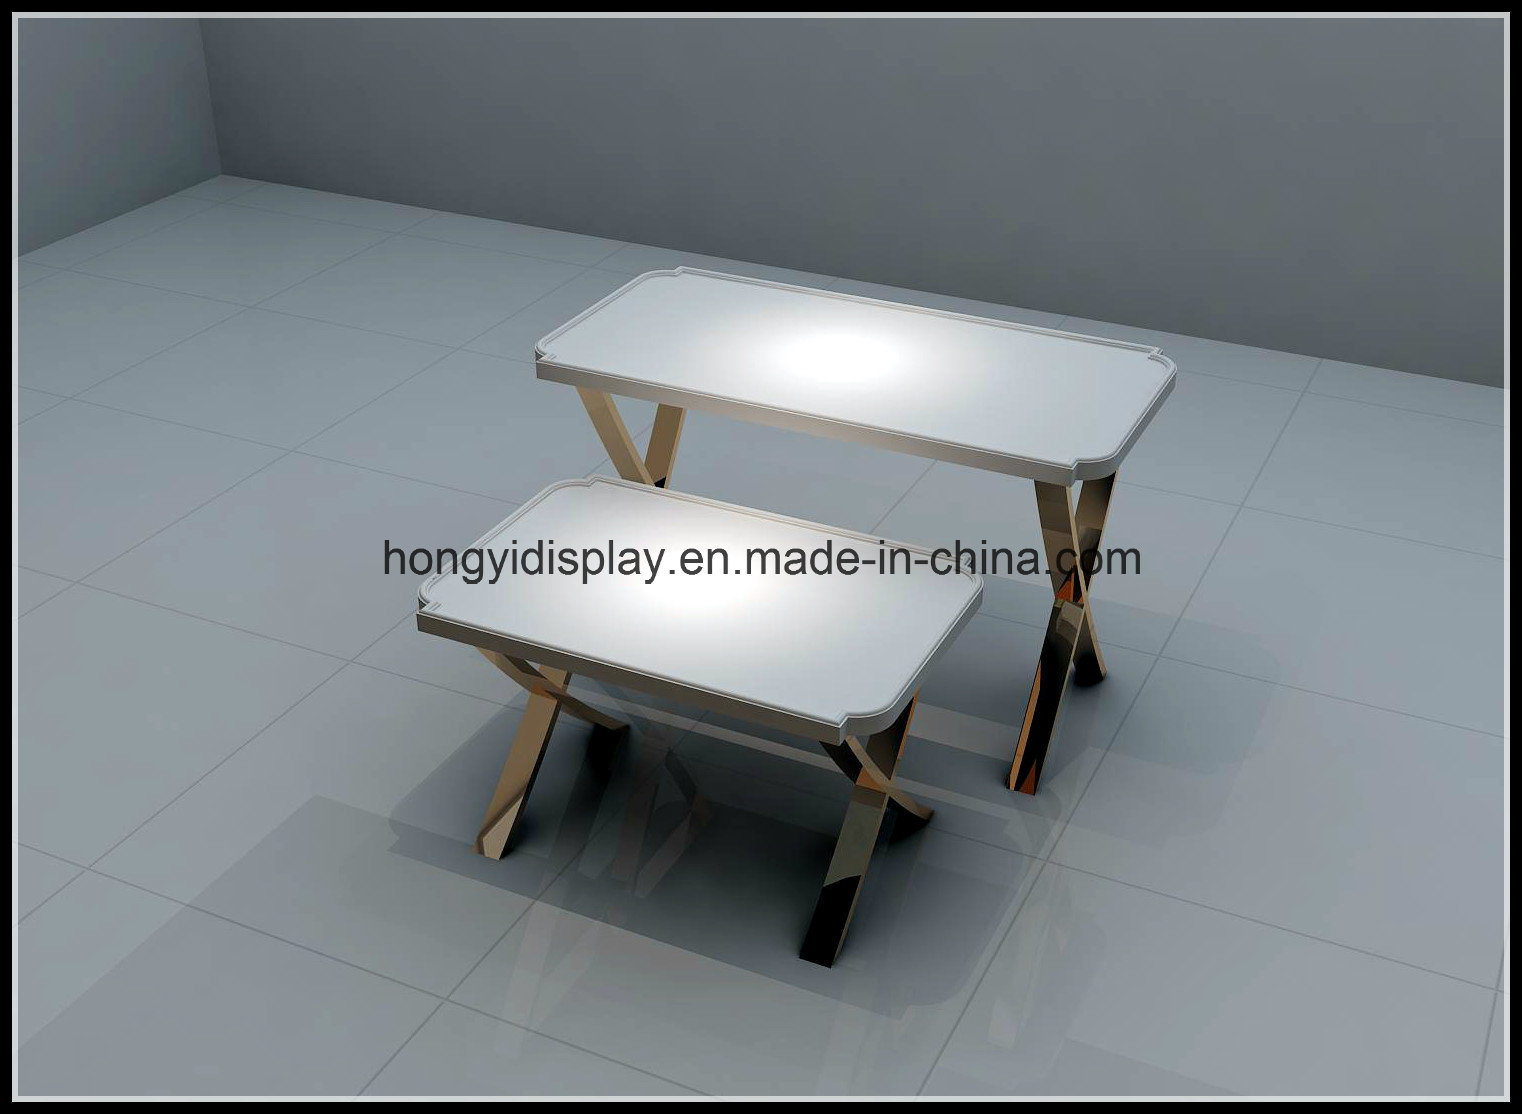 Fashion Display Table with Metal Leg for Shopfitting